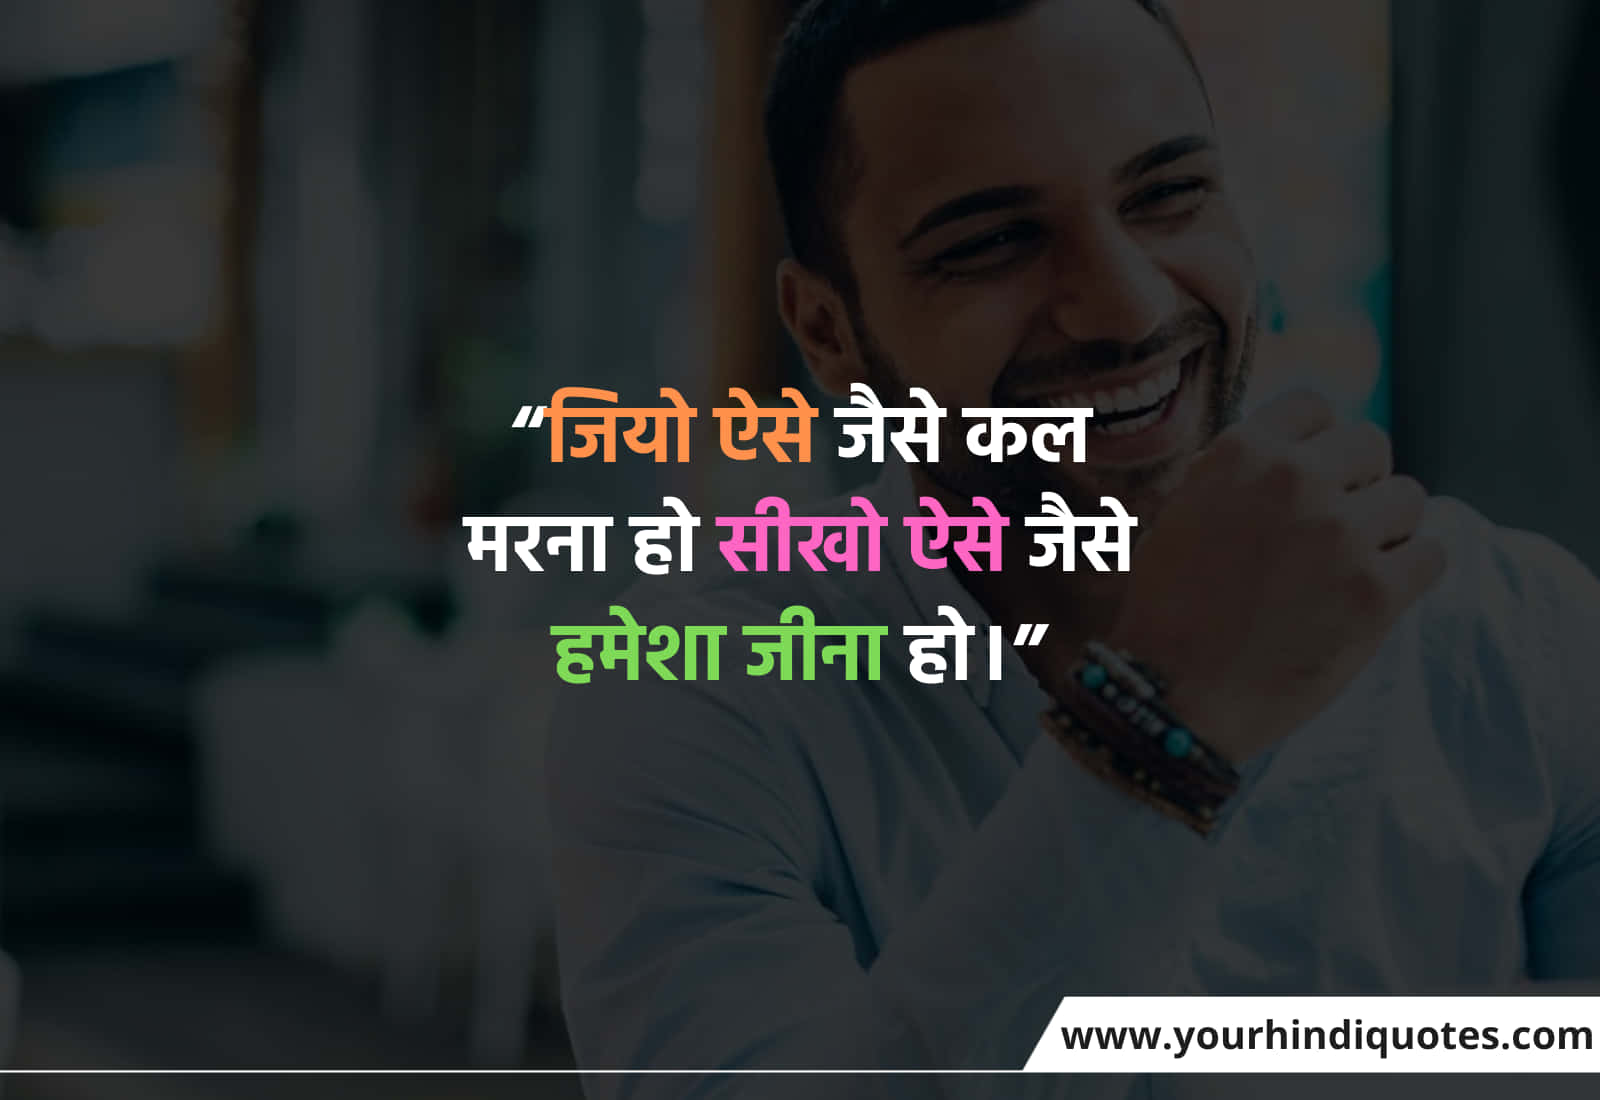 Hindi Sad Quotes for Death